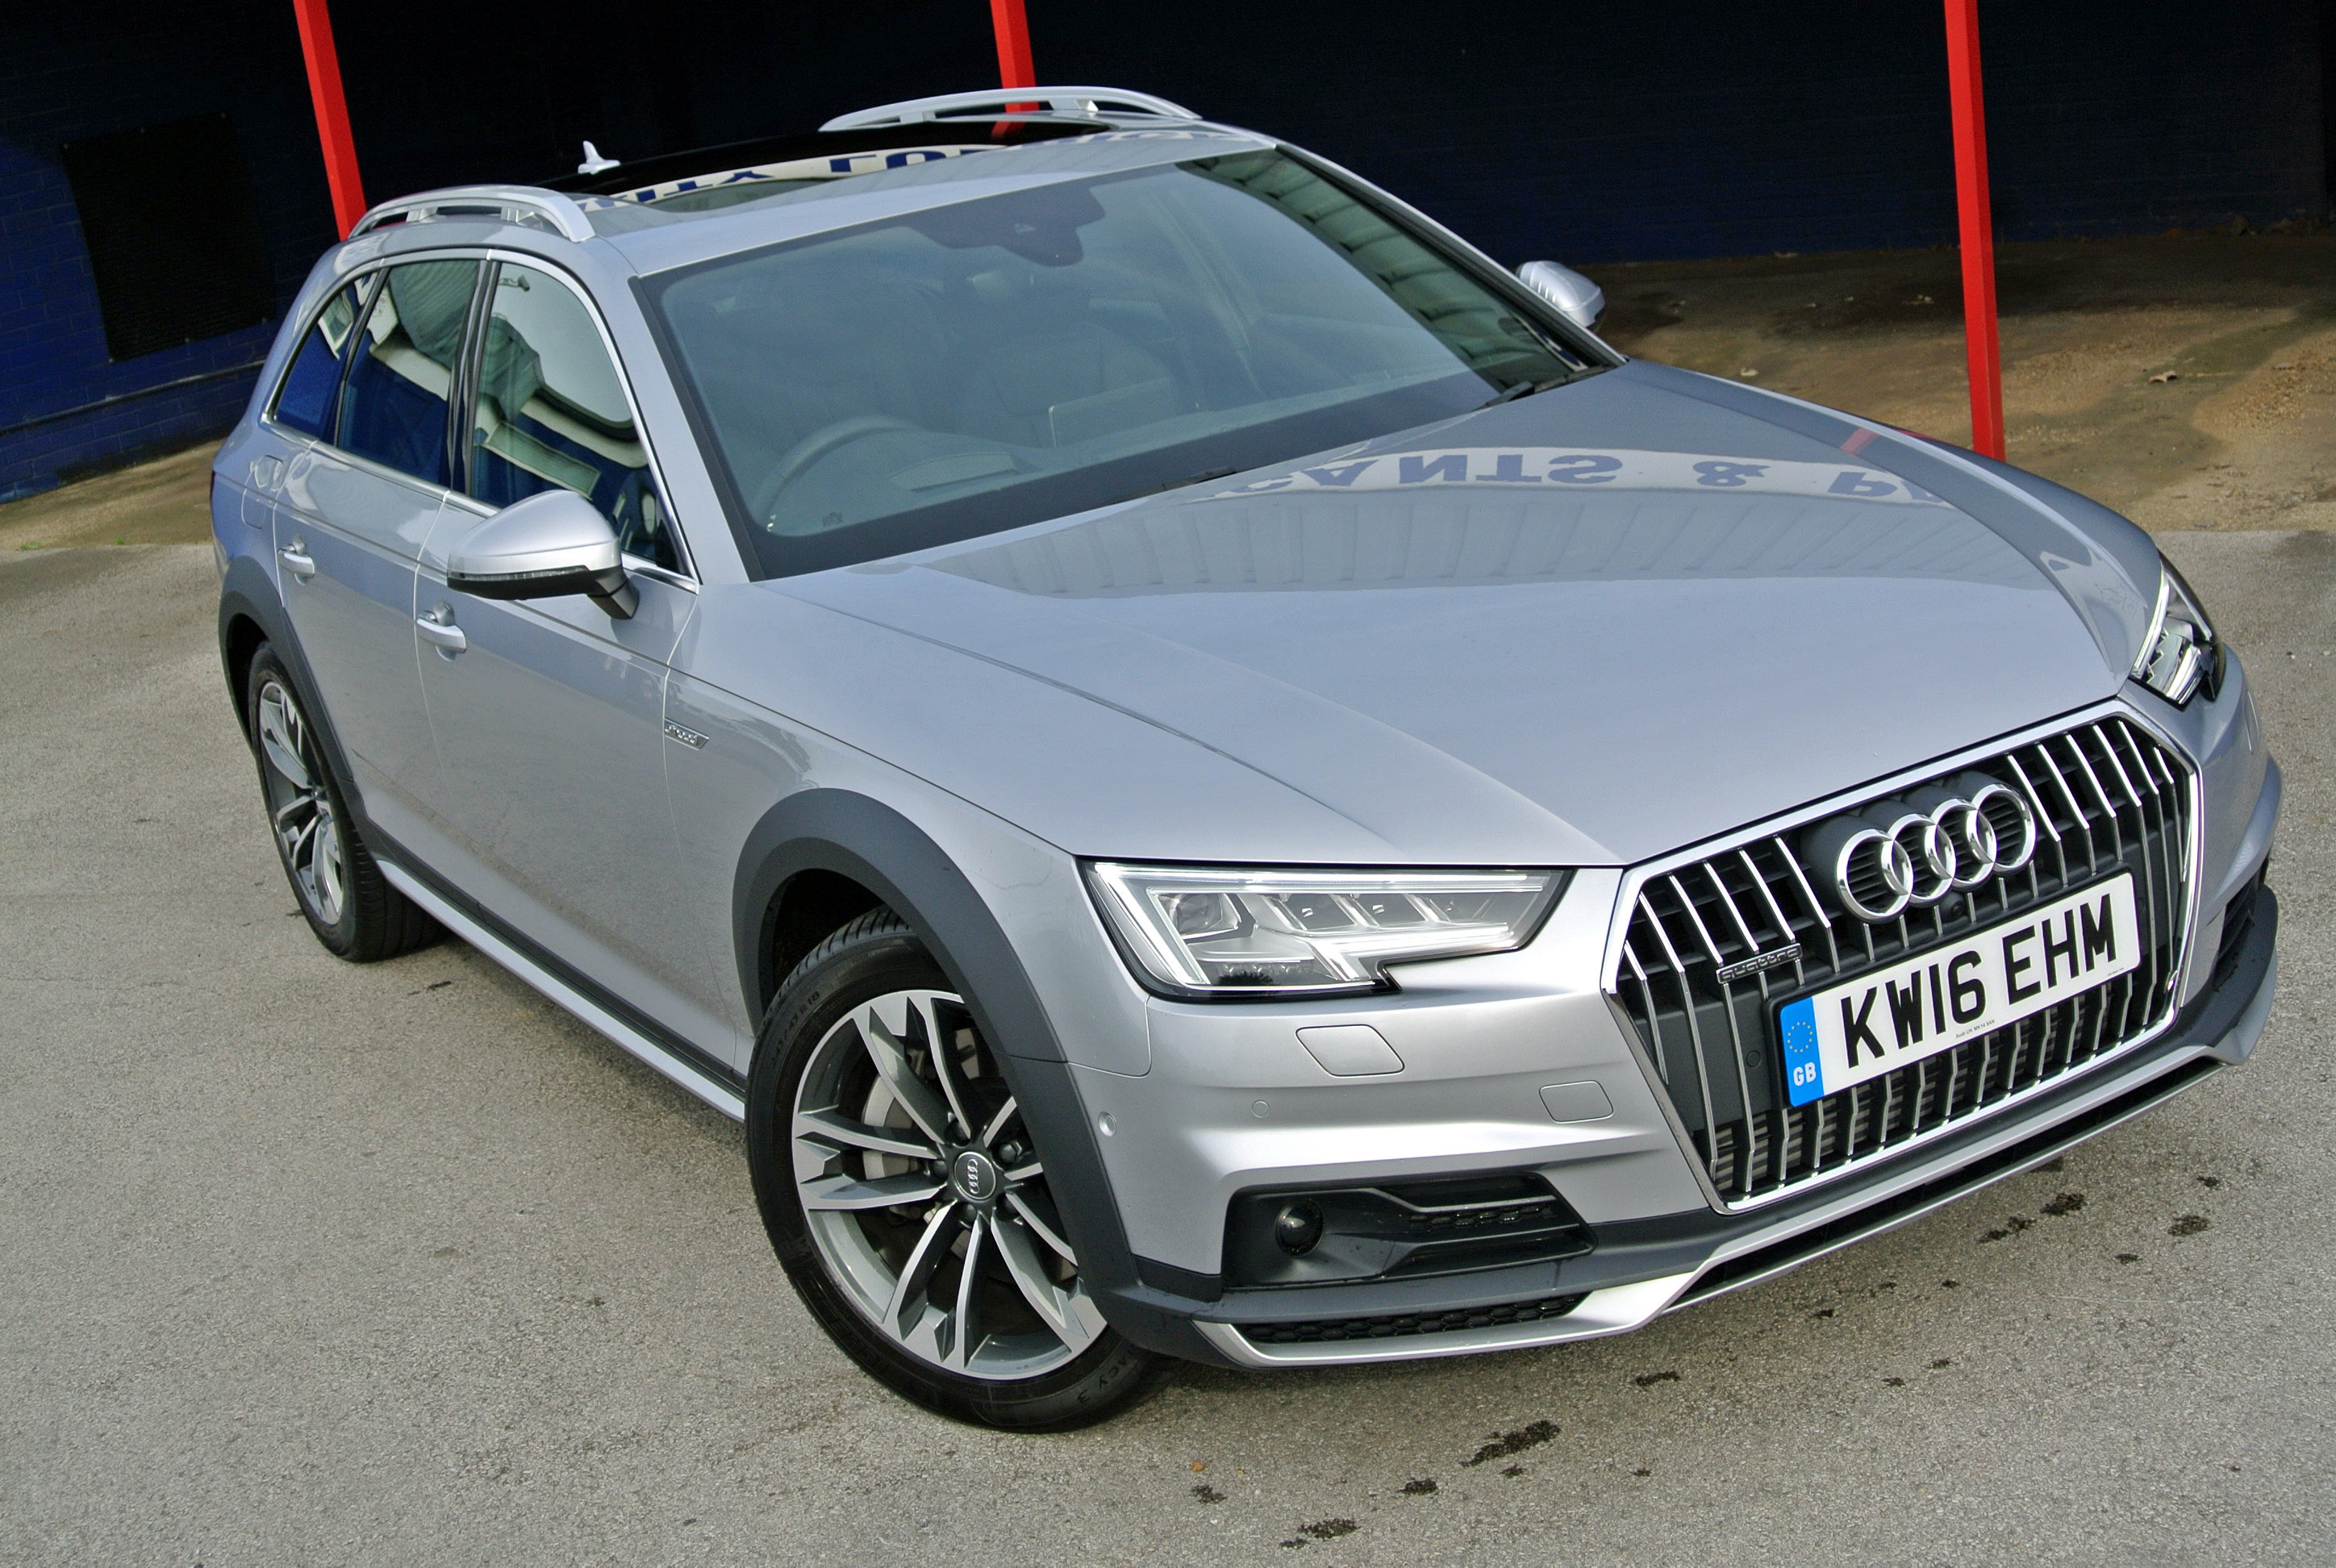 Audi quattro technology creates a most classy all-roader